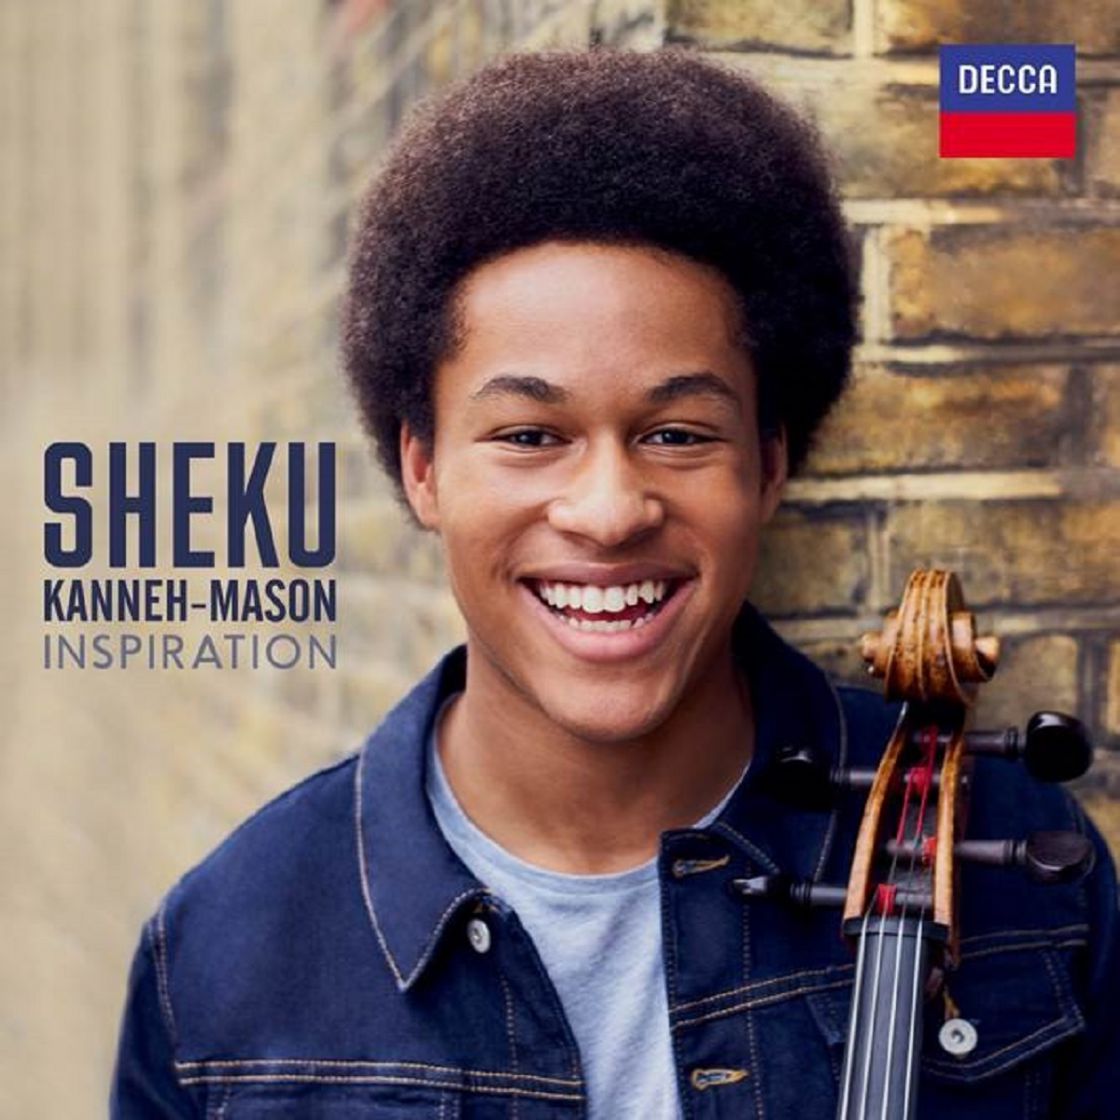 SHEKU KENNEH-MASON - INSPIRATION